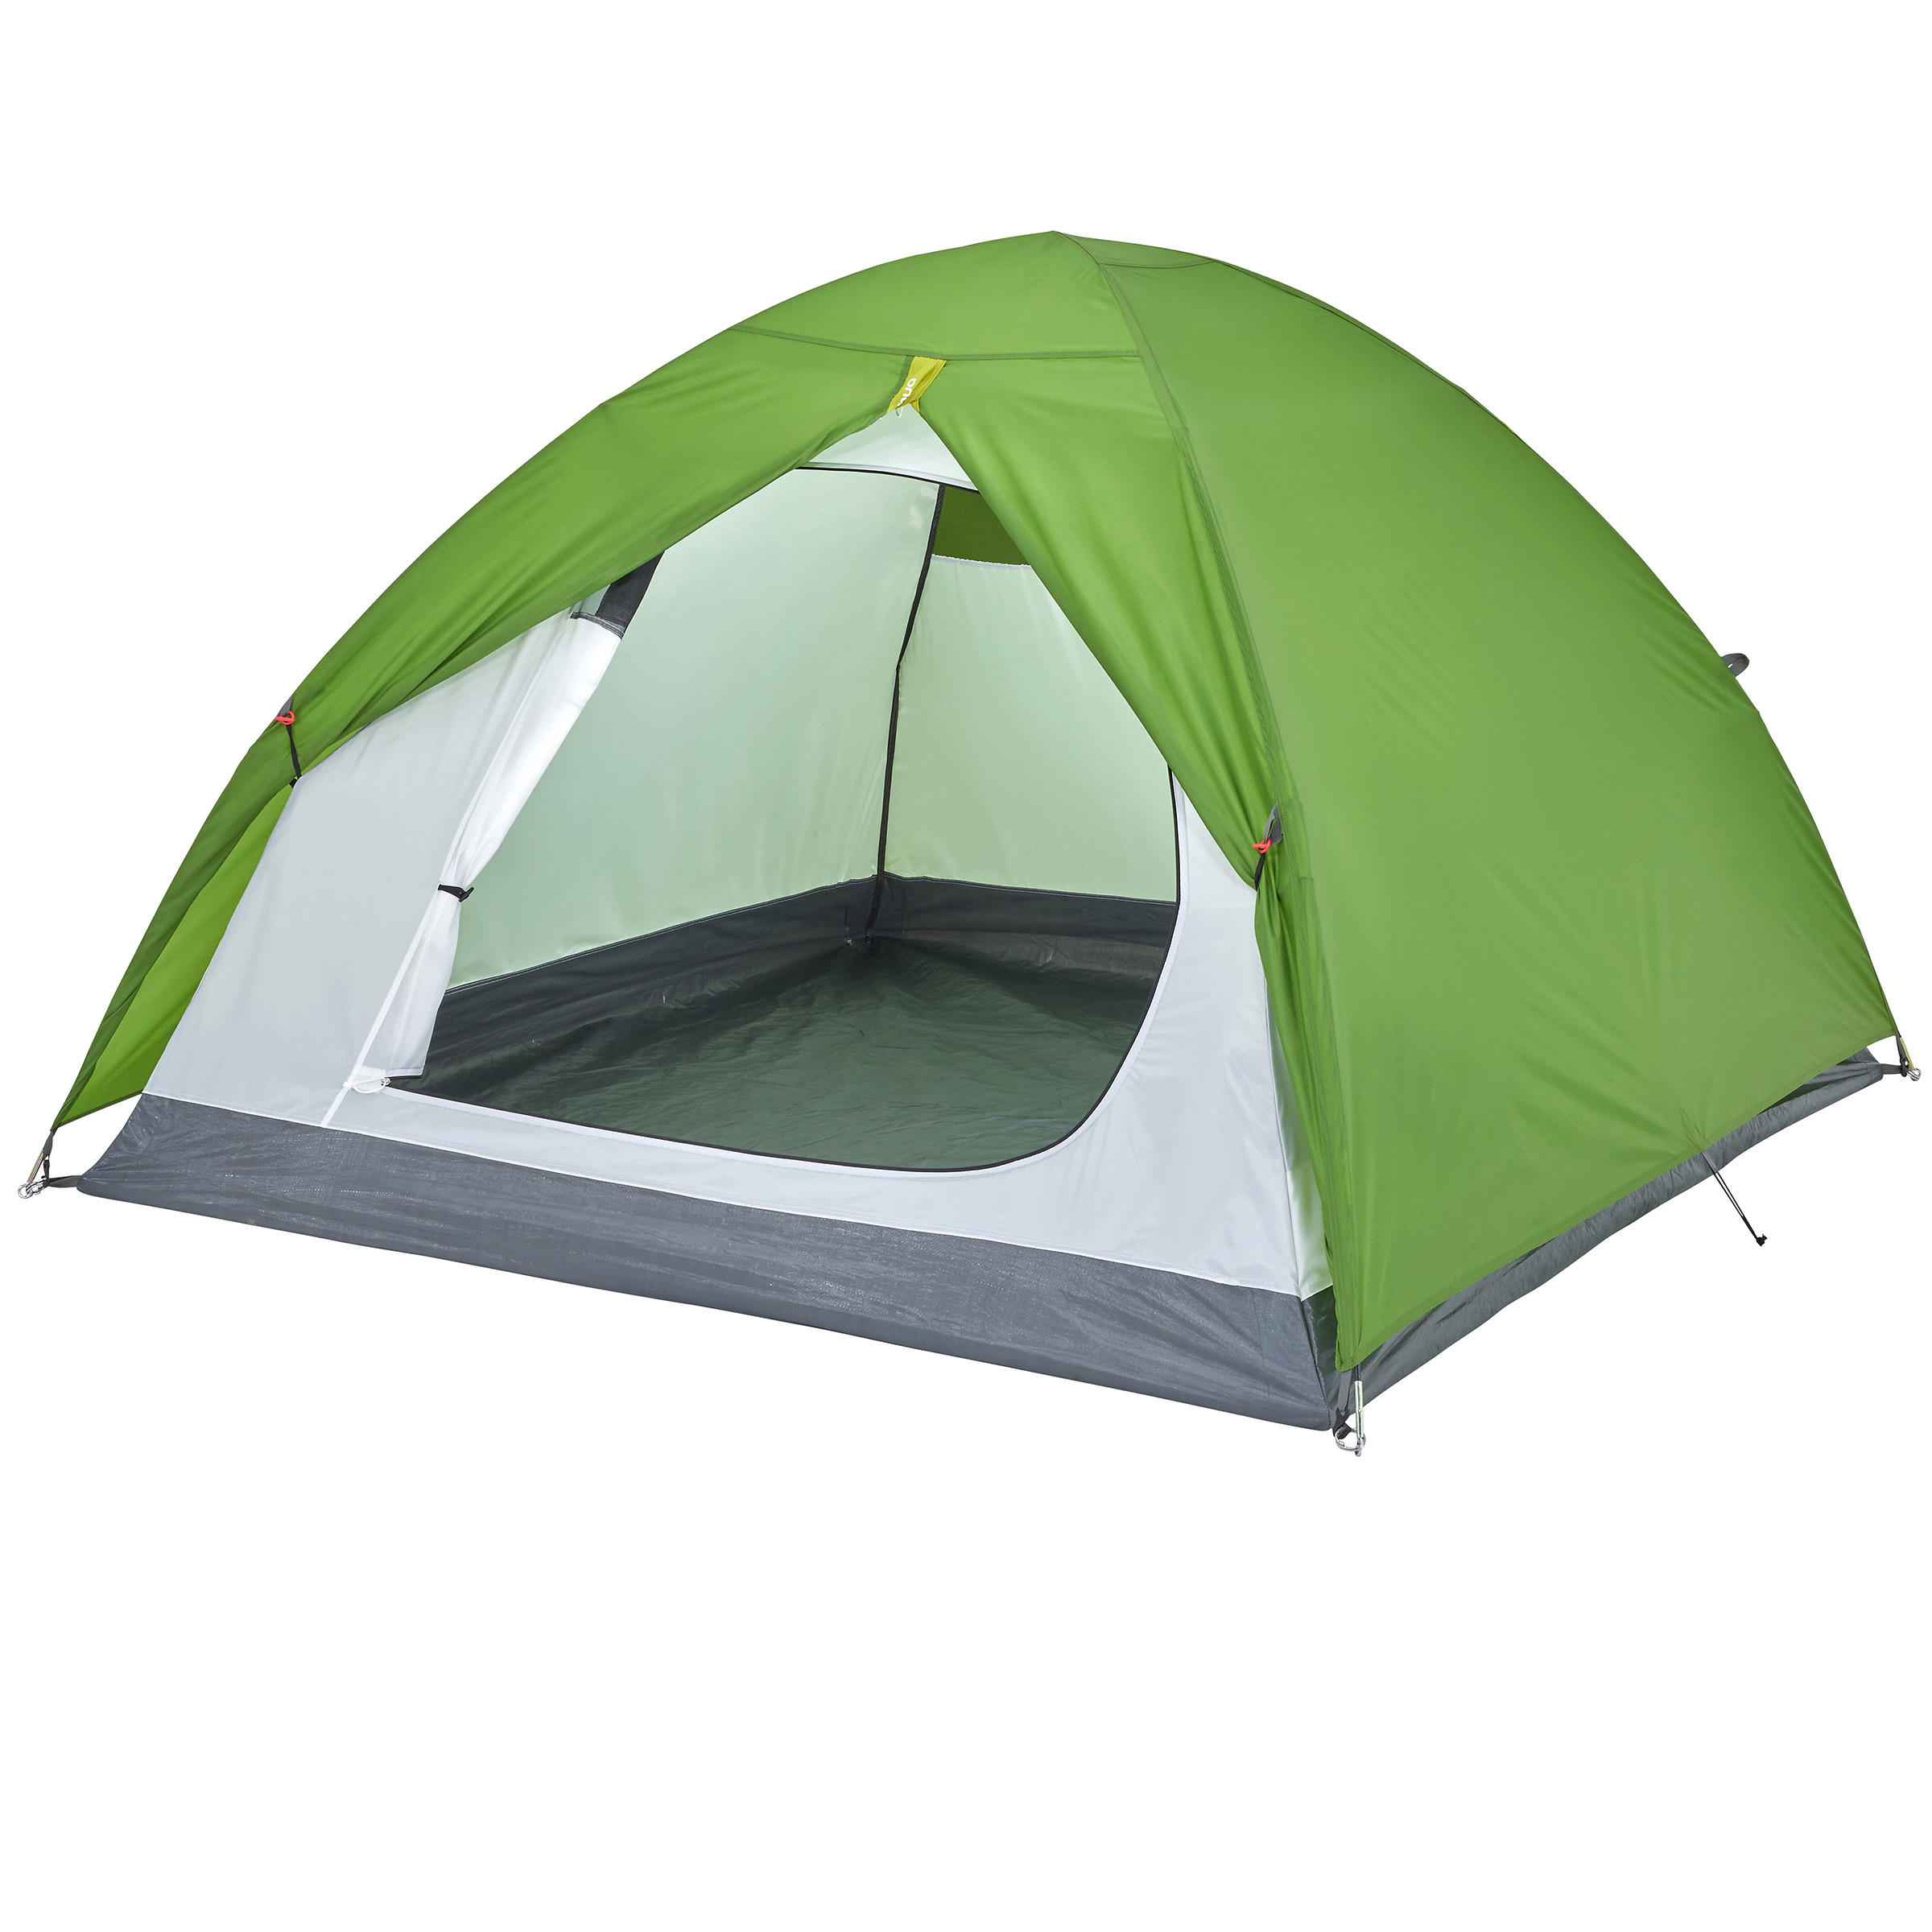 decathlon 3 person tent